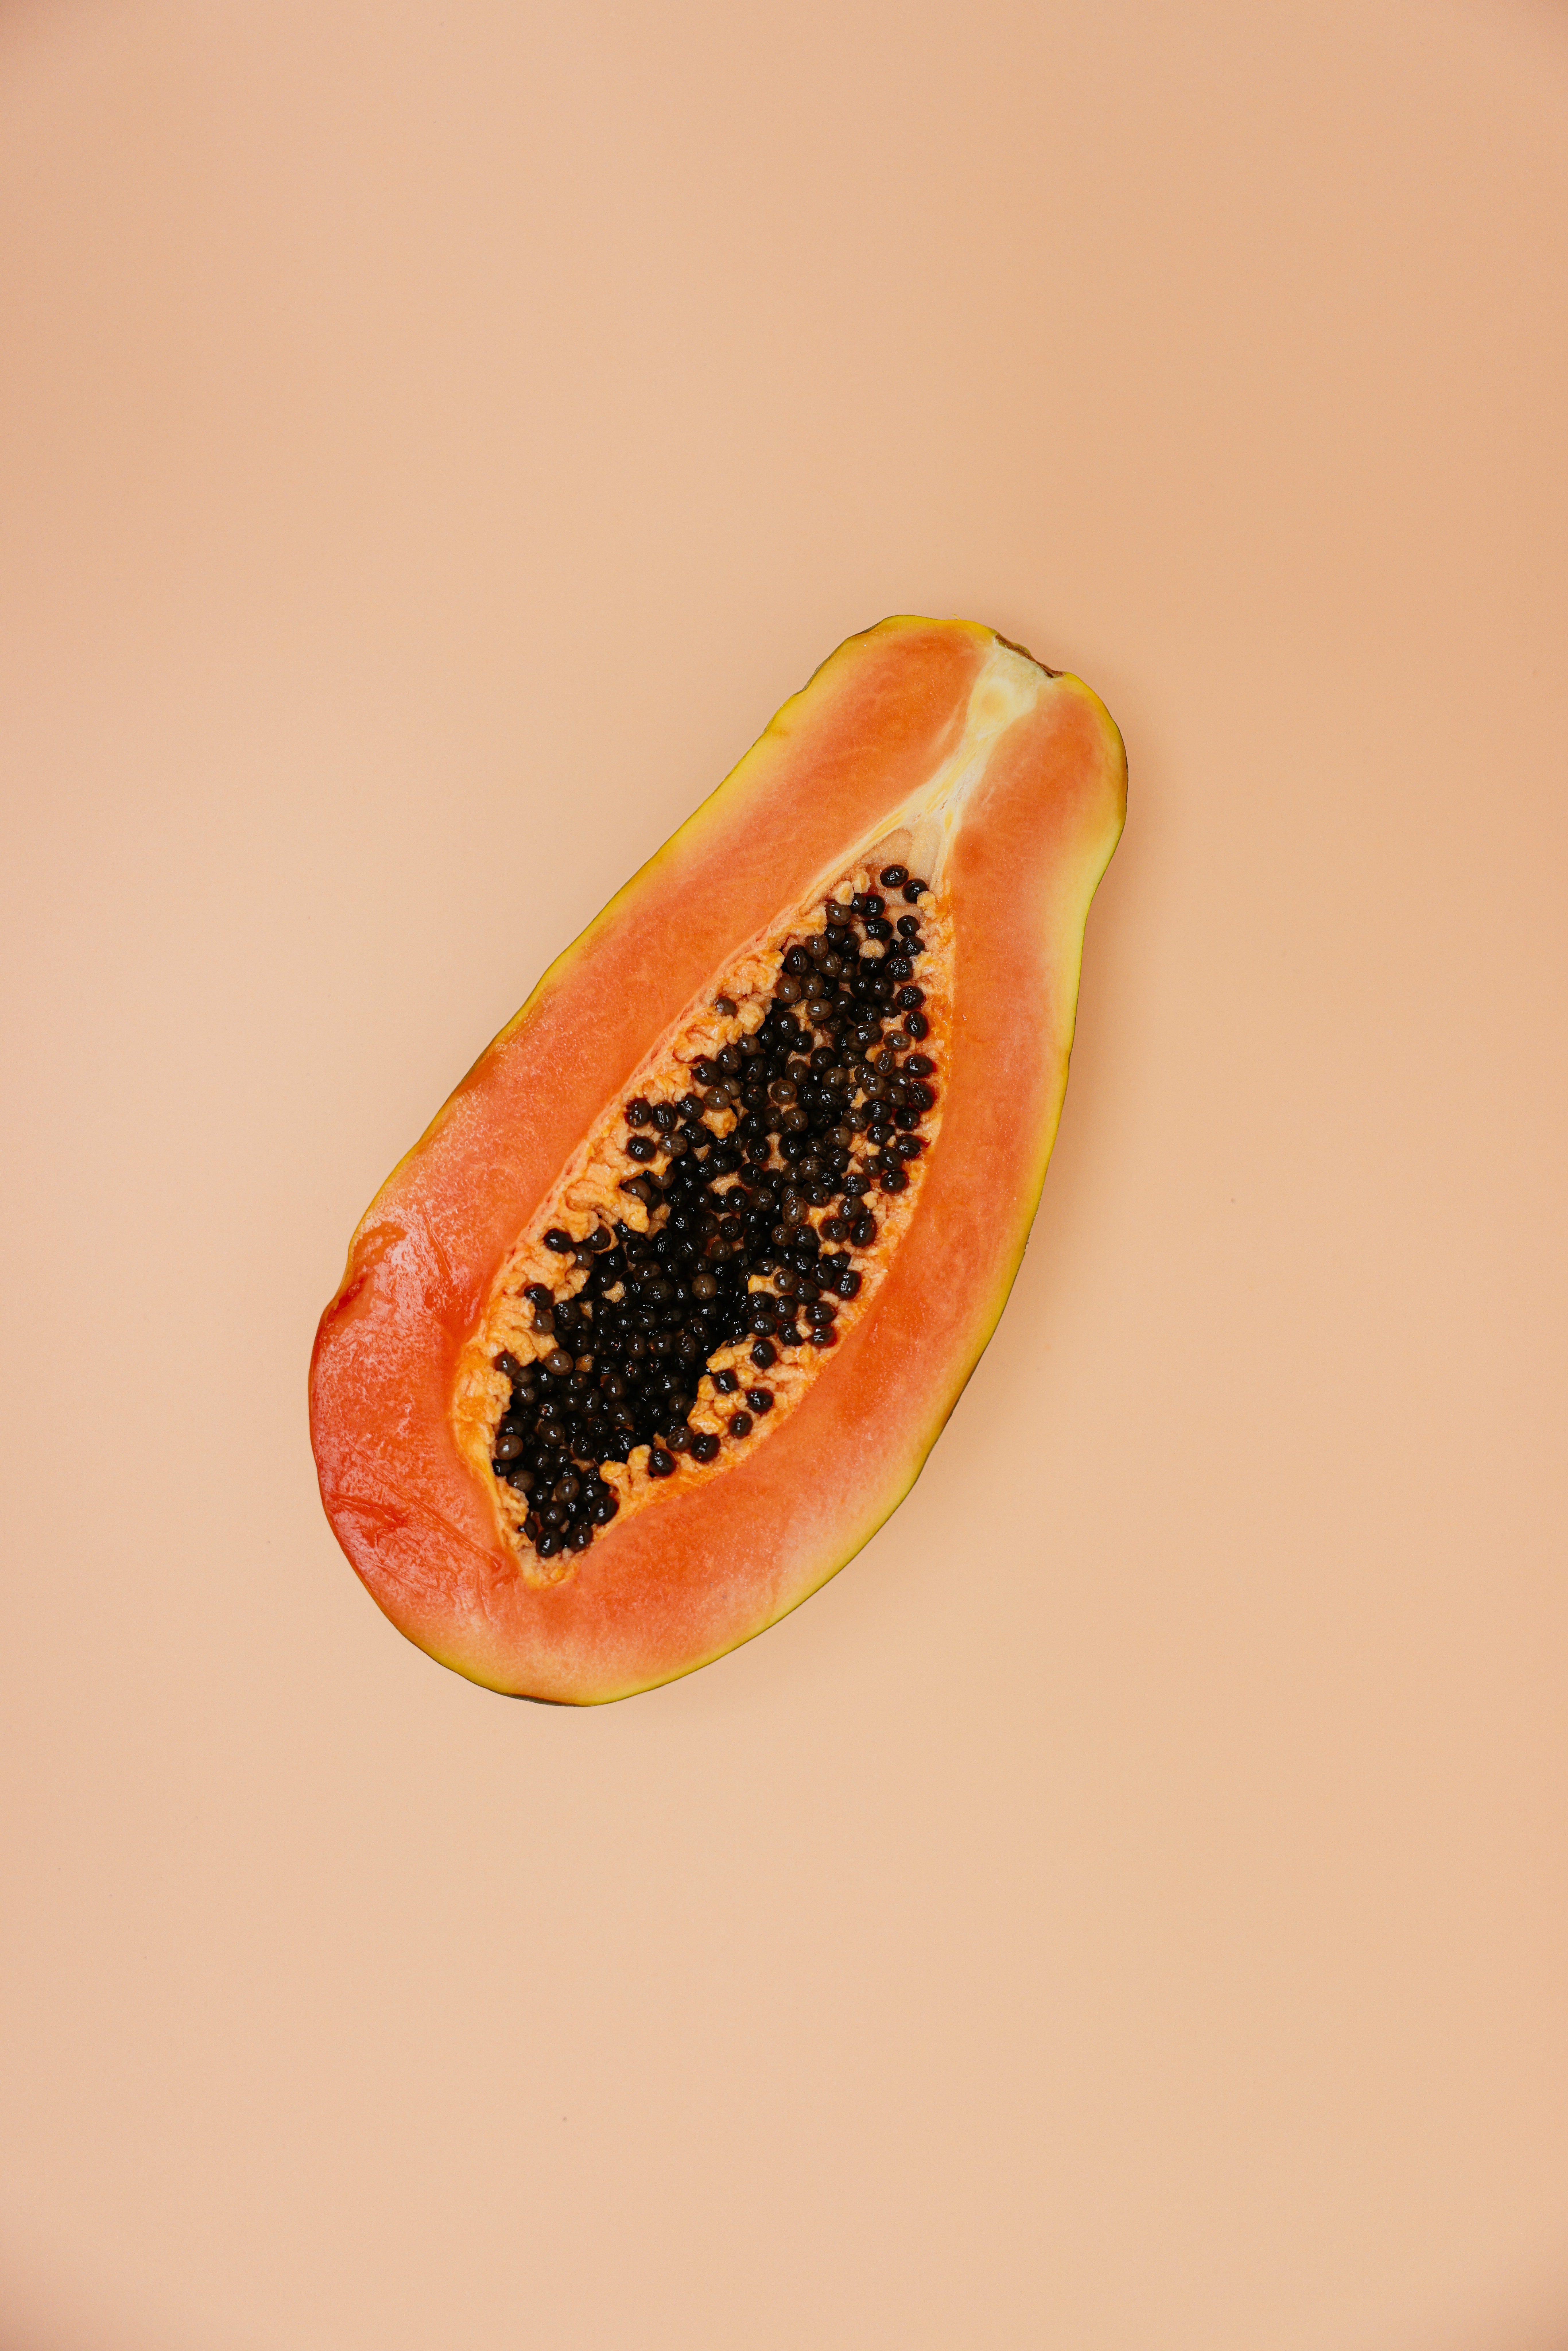 Papaya resembeling uterus